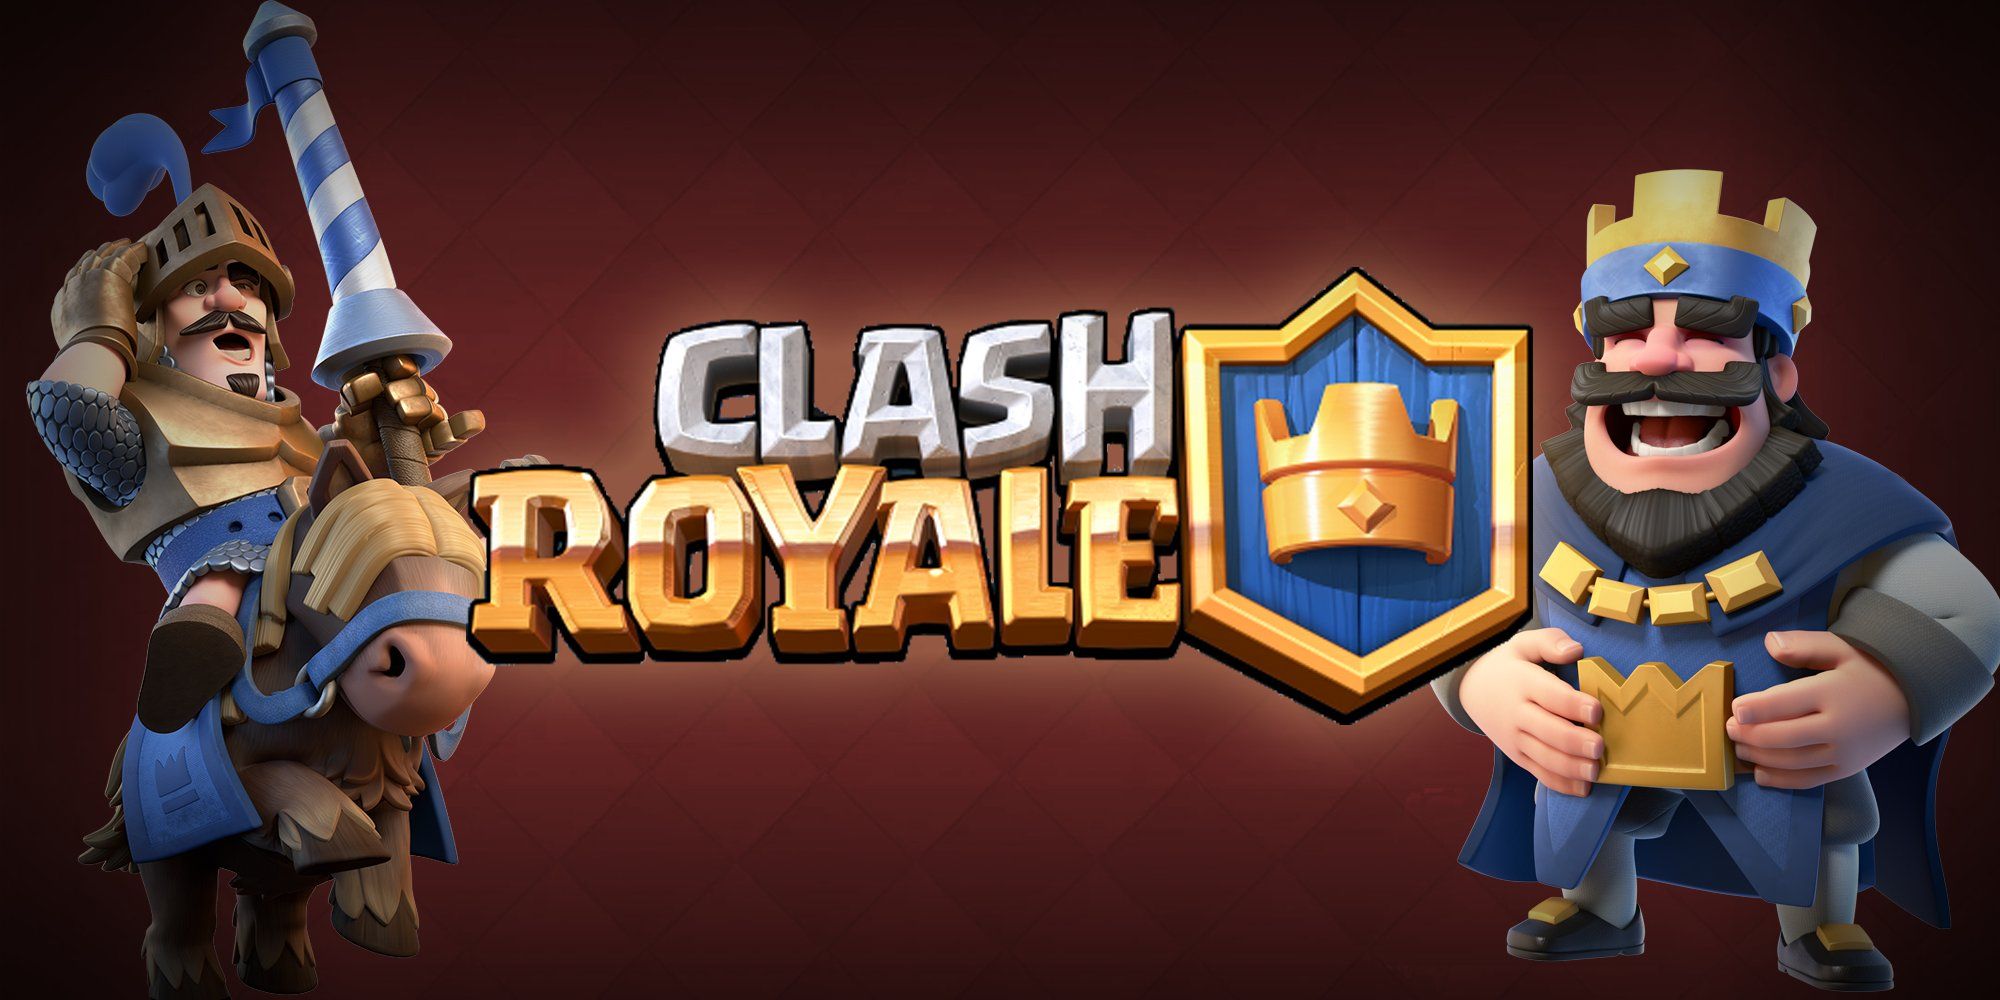 Best Clash Royale 2v2 decks!